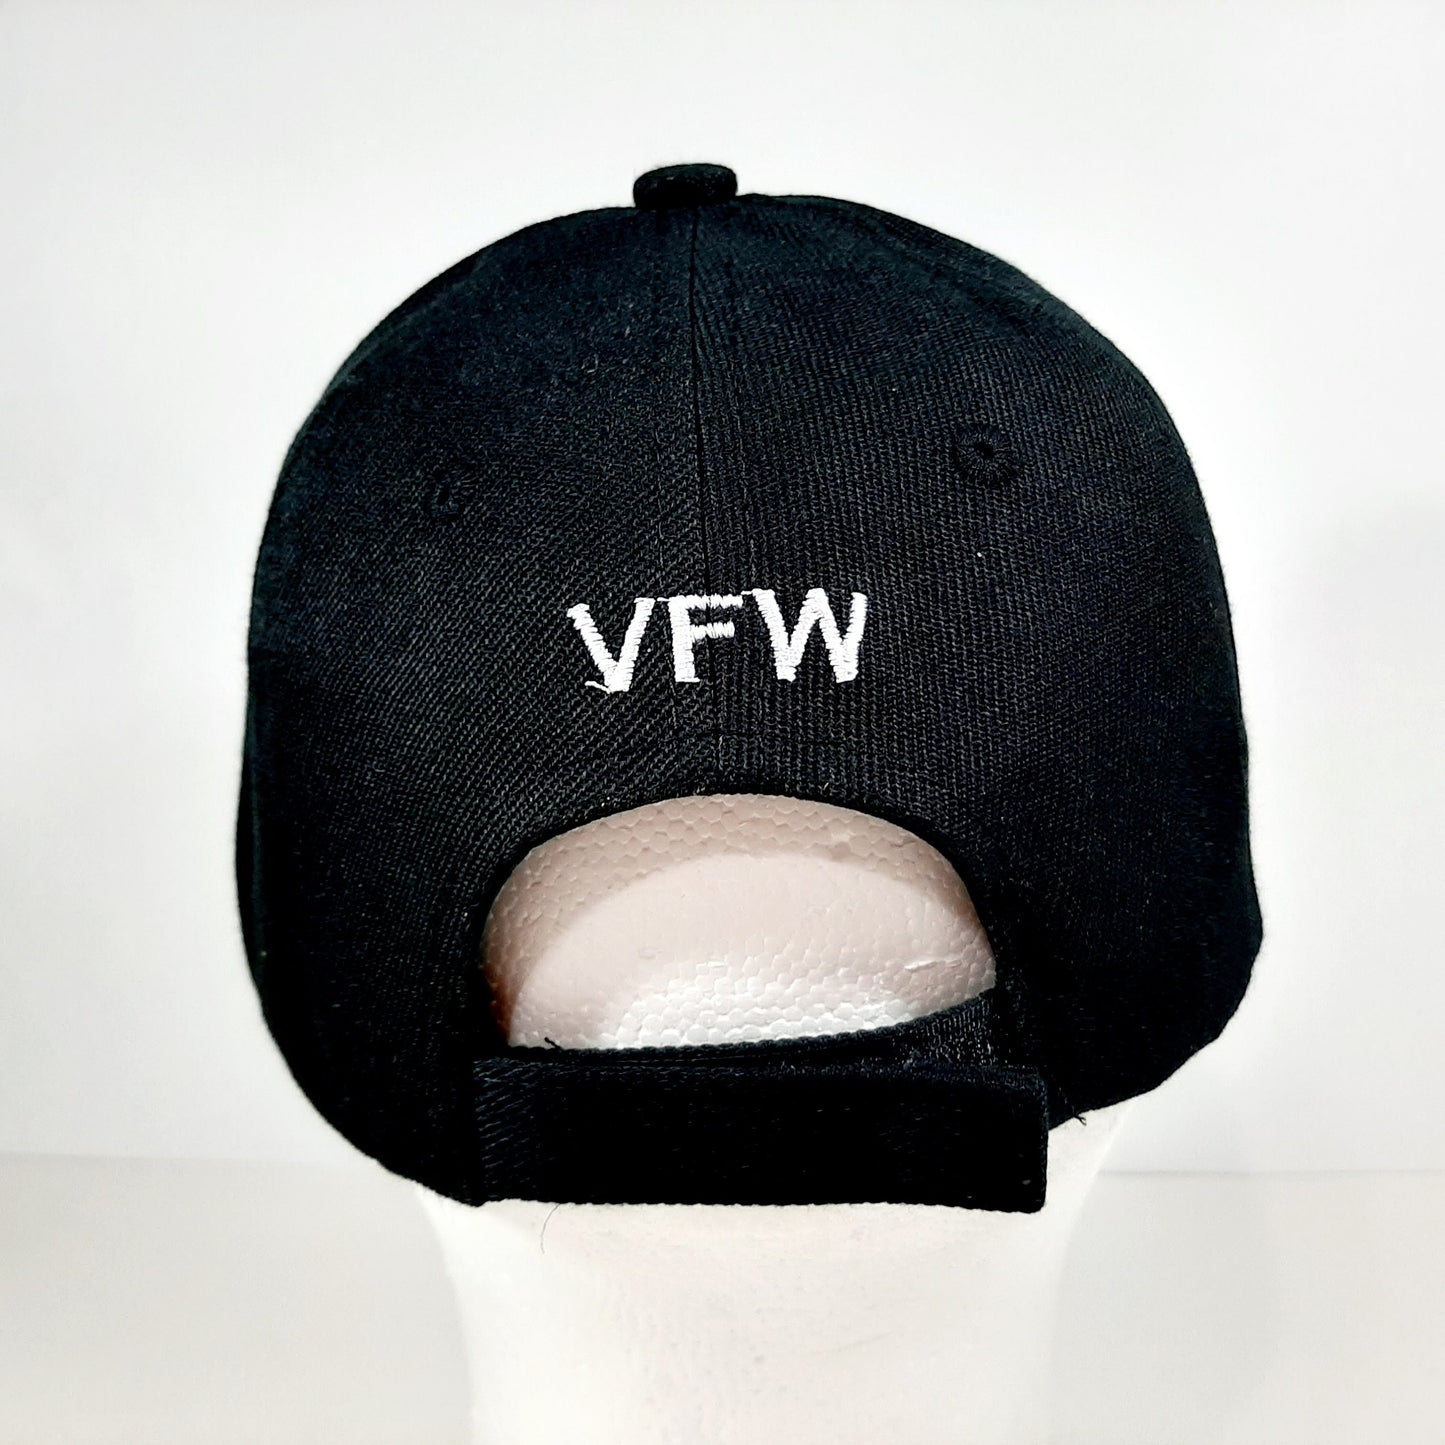 VFW Veterans Of Foreign Wars Baseball Cap Hat Mens One Size Adjustable Black